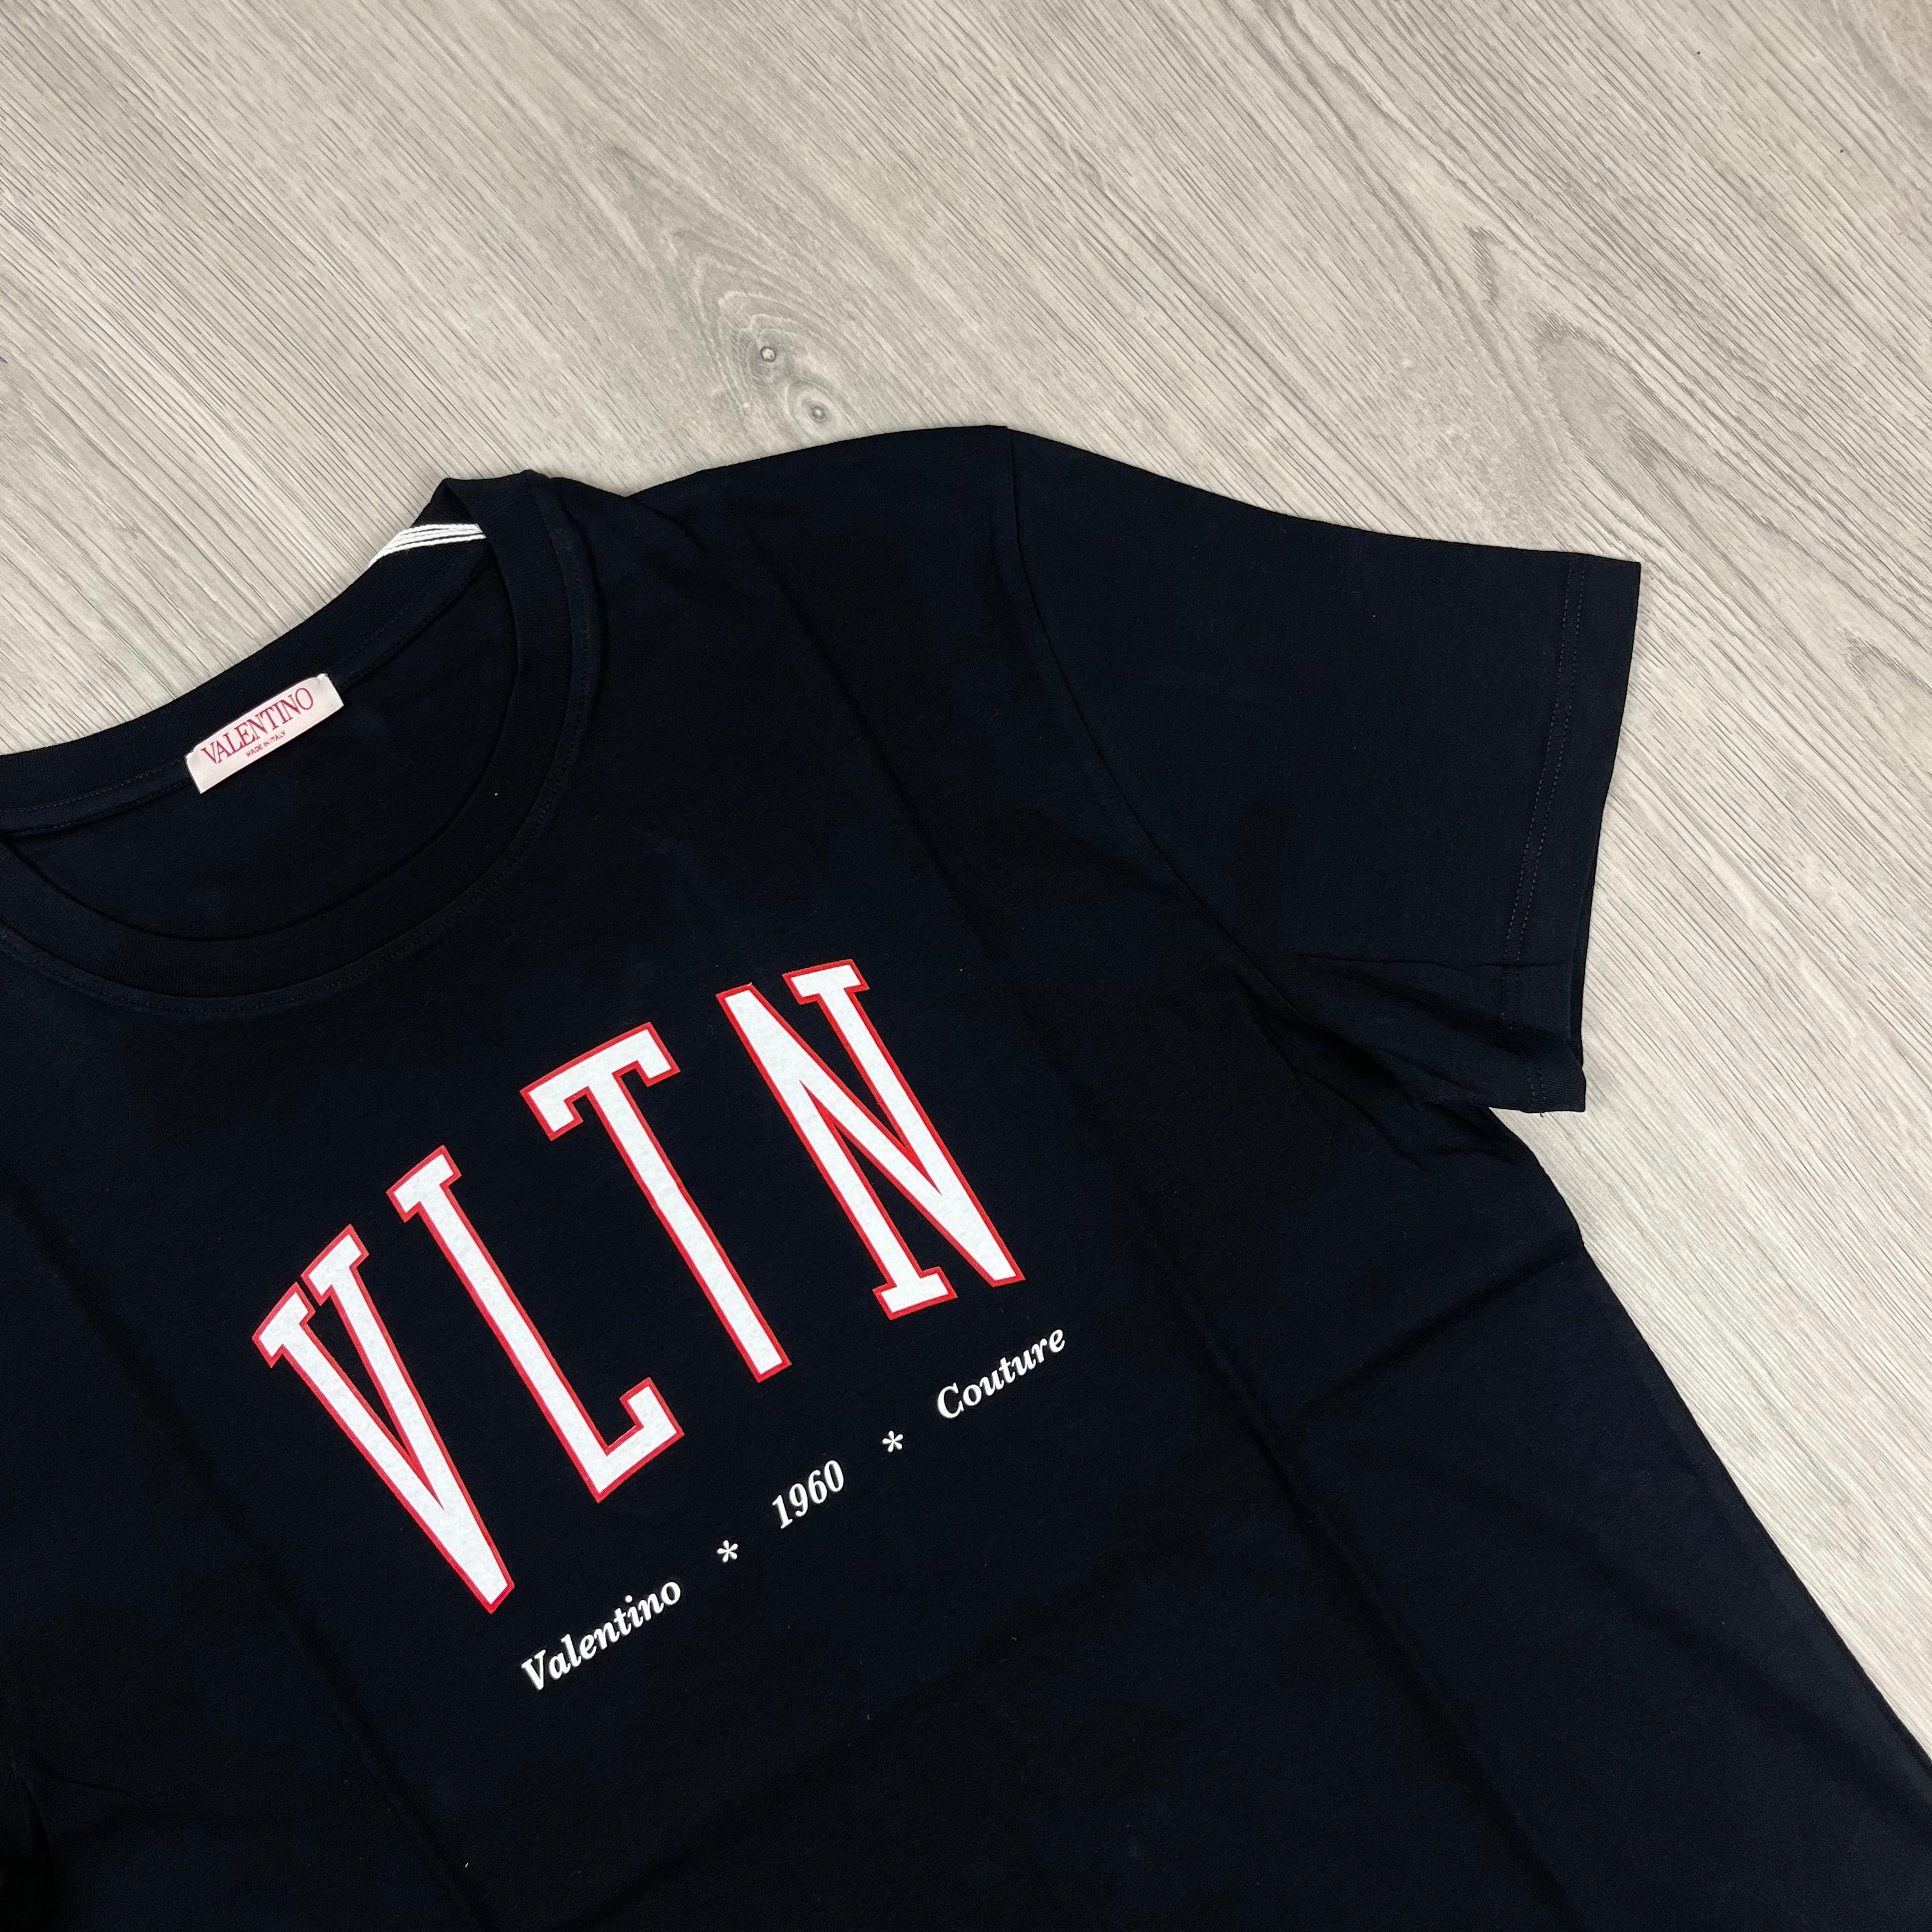 Valentino Logo T-Shirt